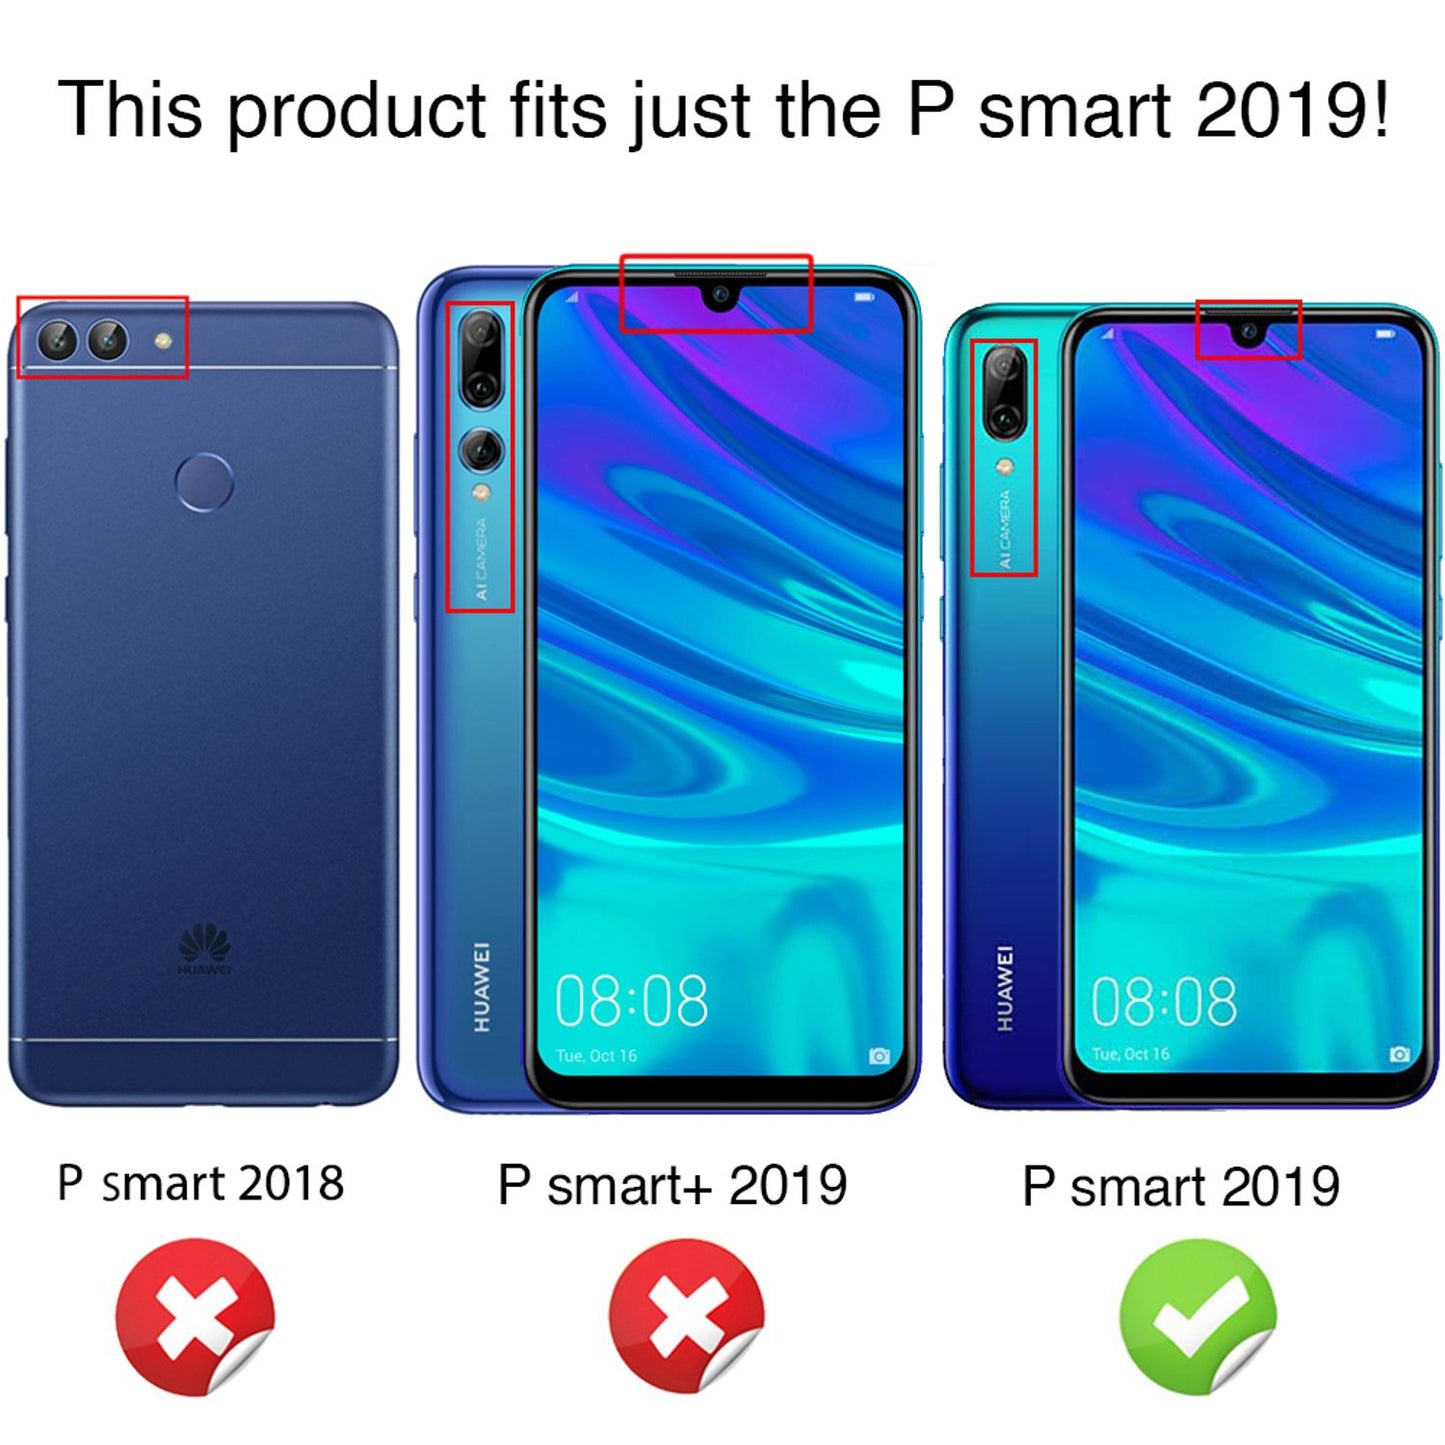 NALIA Schutz Glas für Huawei P smart 2019, 9H Full Cover Display Panzer Folie